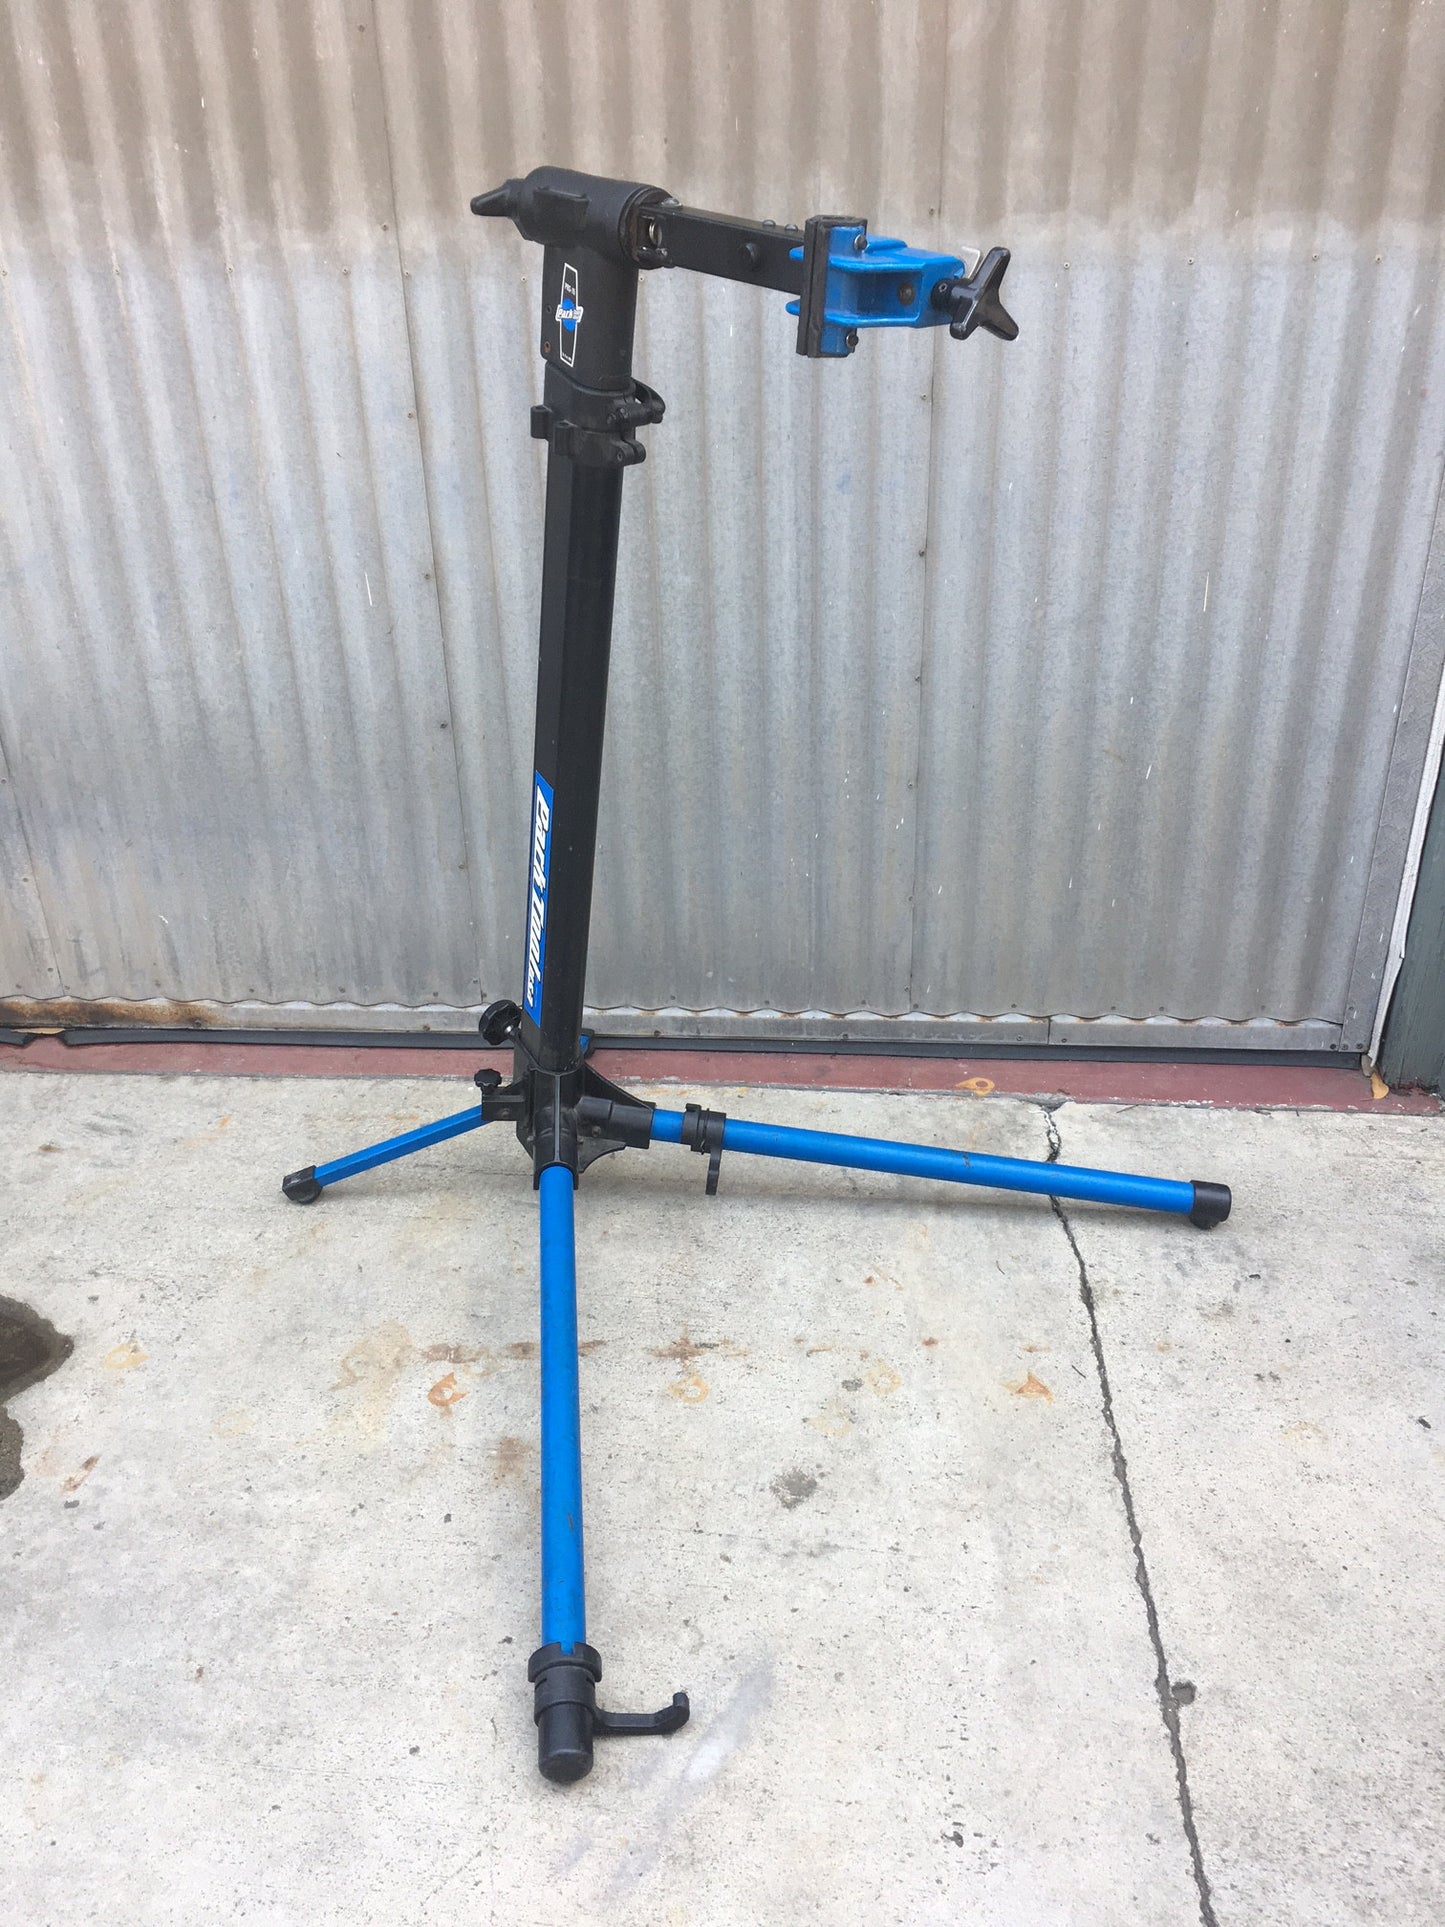 Shop Equipment - Portable Professional Bicycle Workstand for Prop Rental - Studio Rental